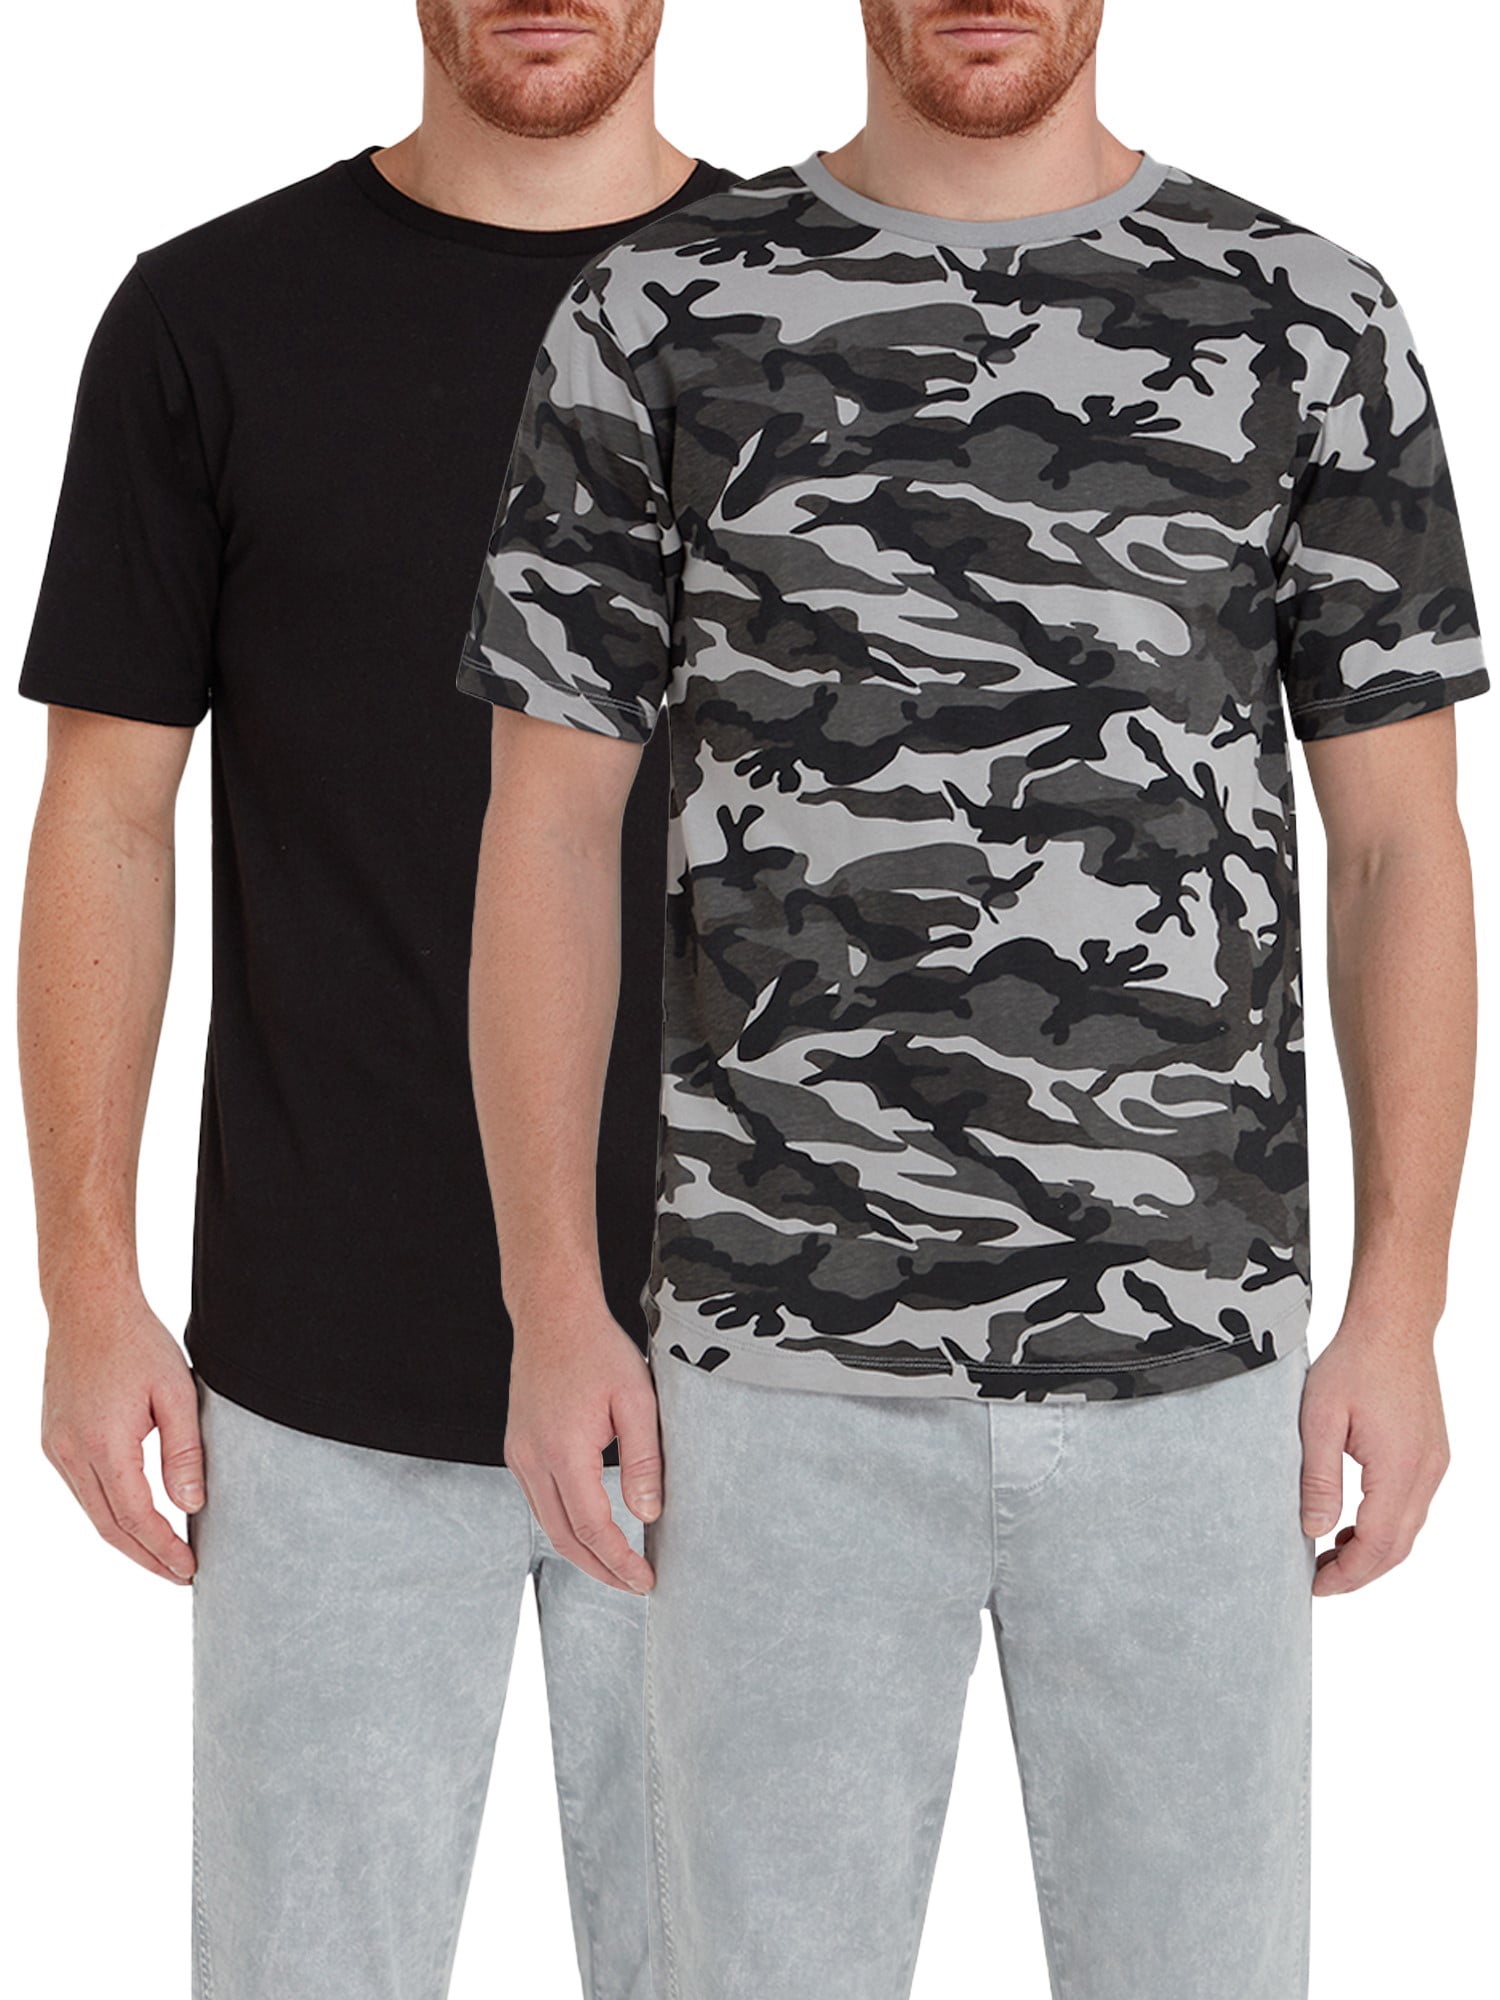 ANIMAL MENS Light Grey  Long Sleeve T-Shirt  tee for Men SIZES XS/S/XL FREE PP 